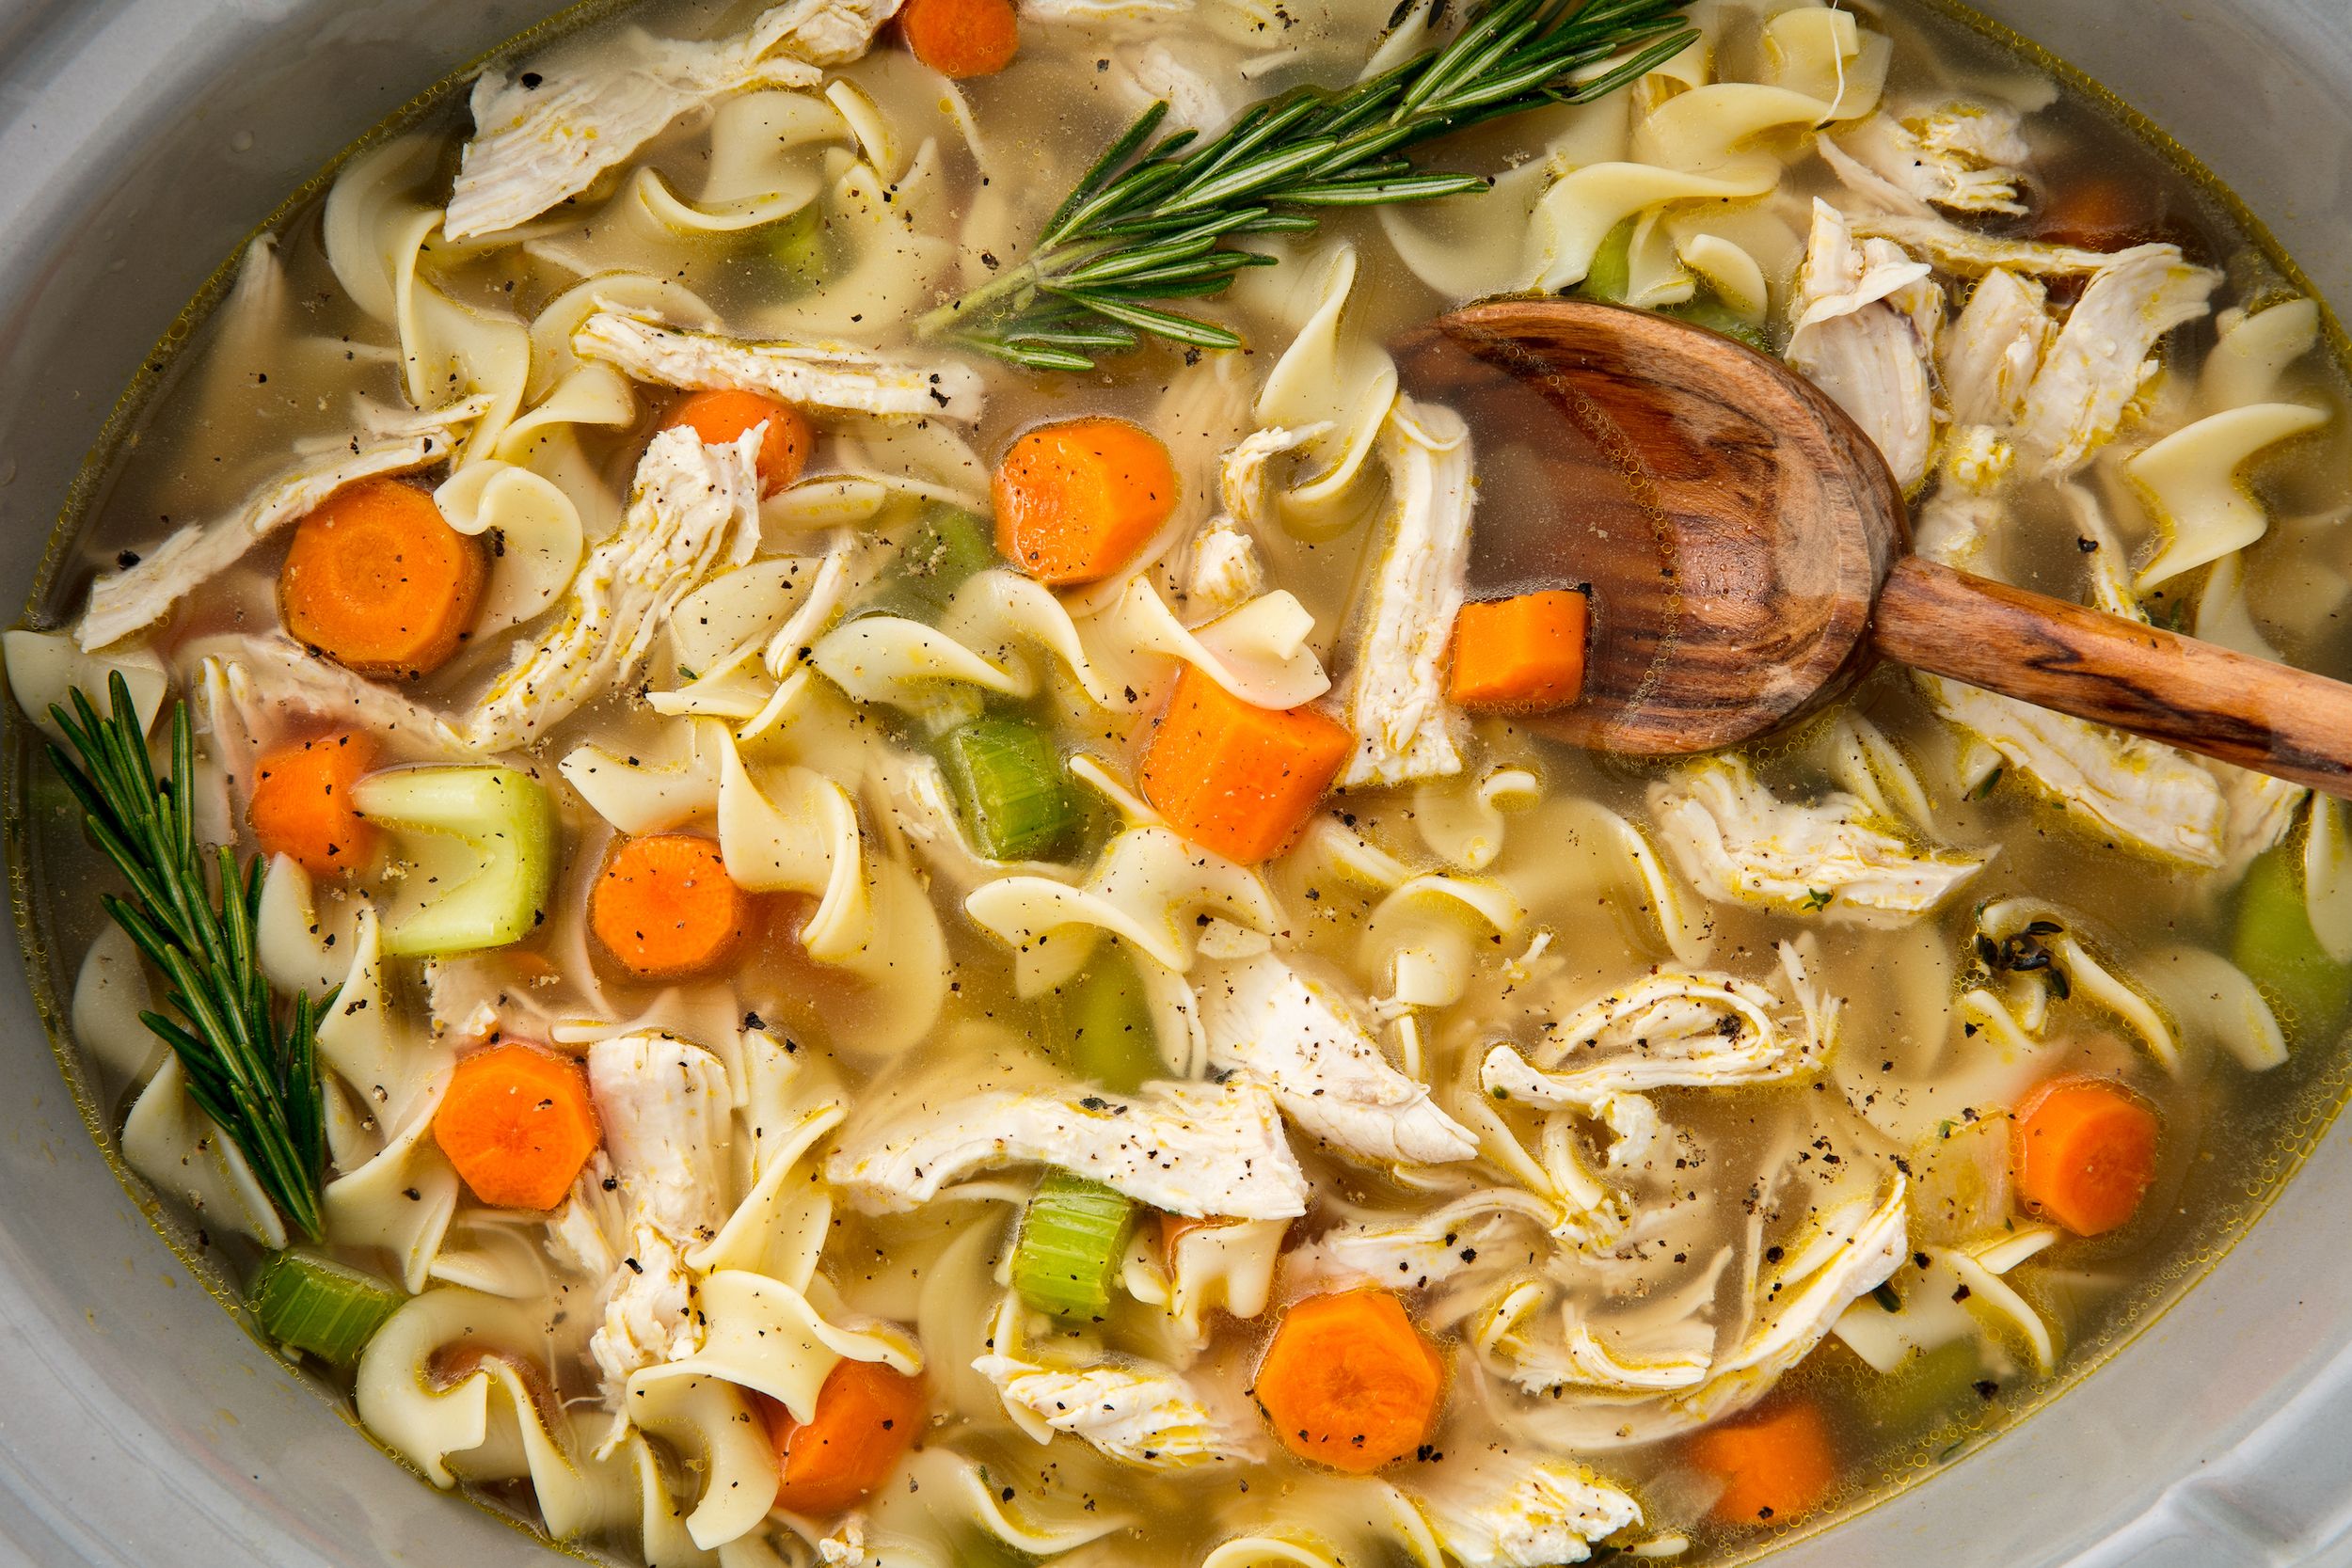 Recipe: Chicken Noodle Soup